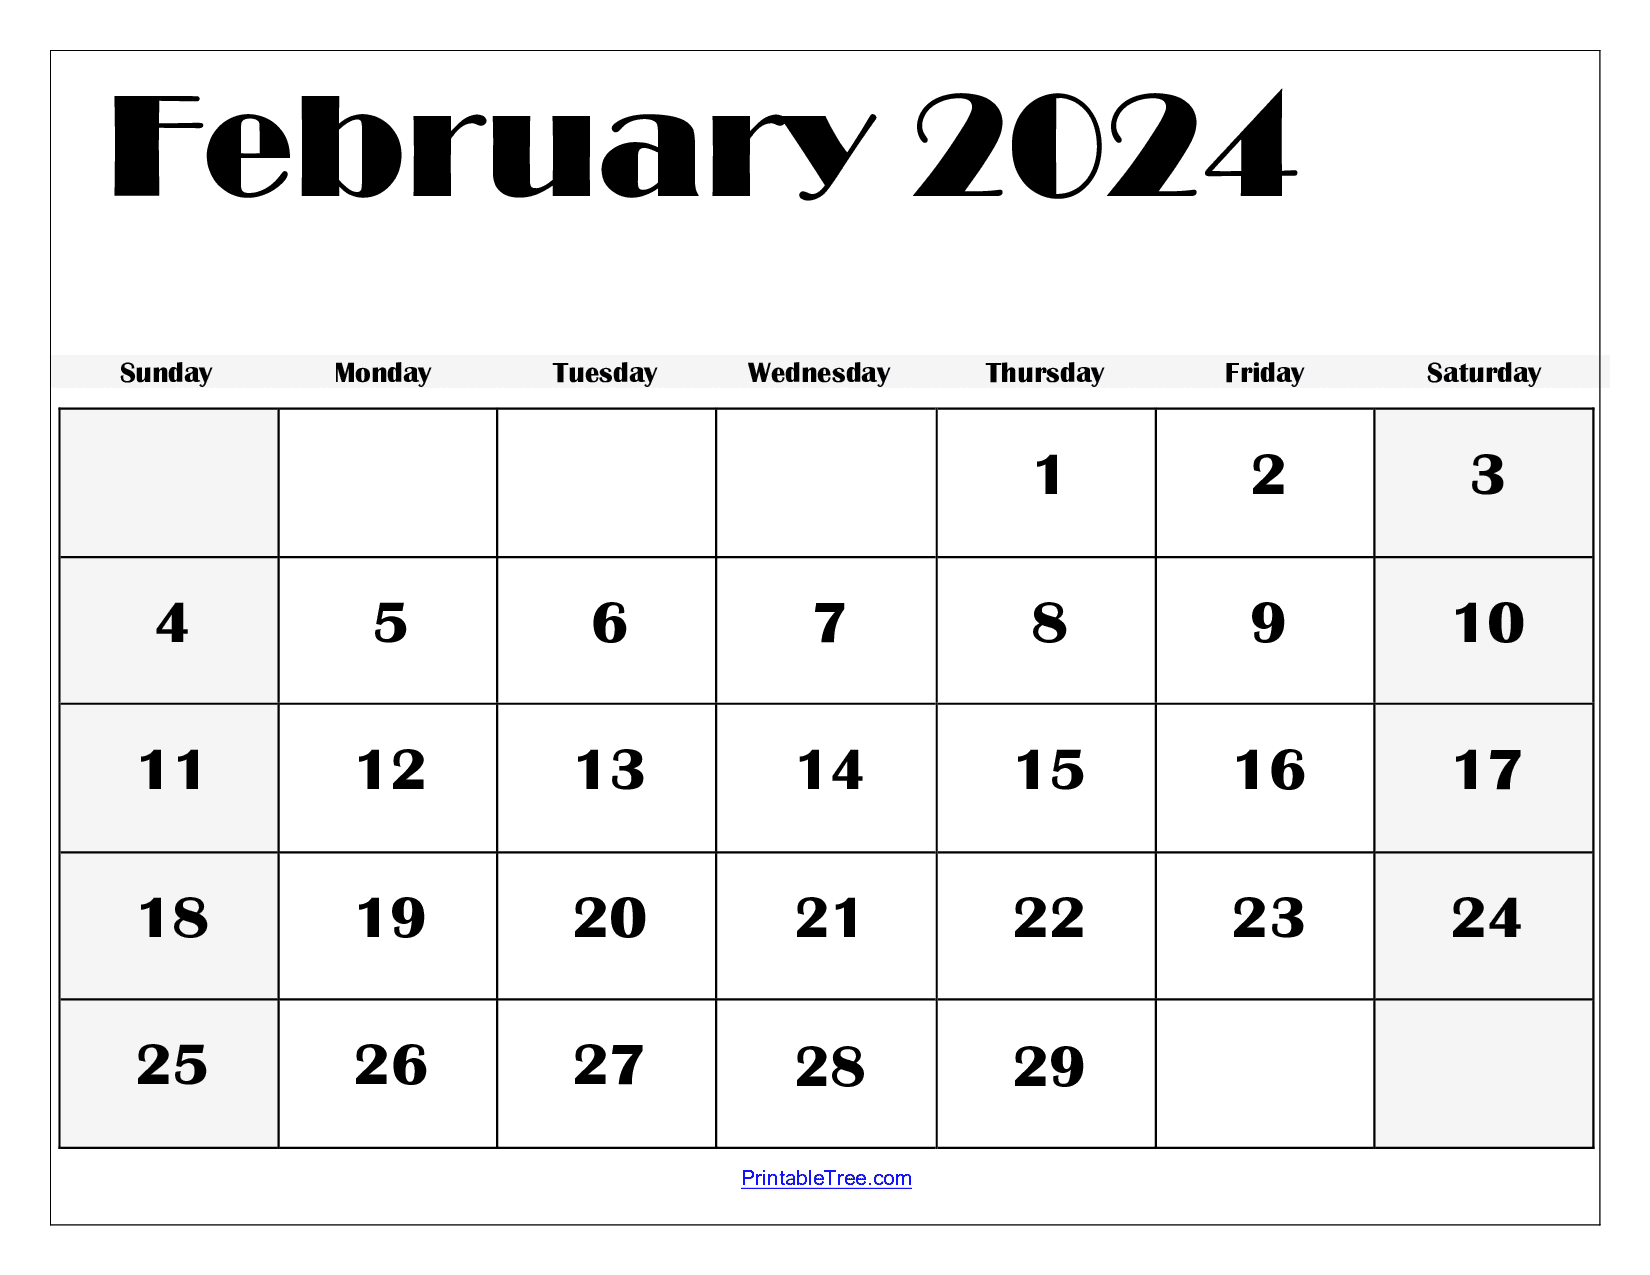 February 2024 Calendar Printable Pdf Template With Holidays for Feb 2024 Calendar Printable Free